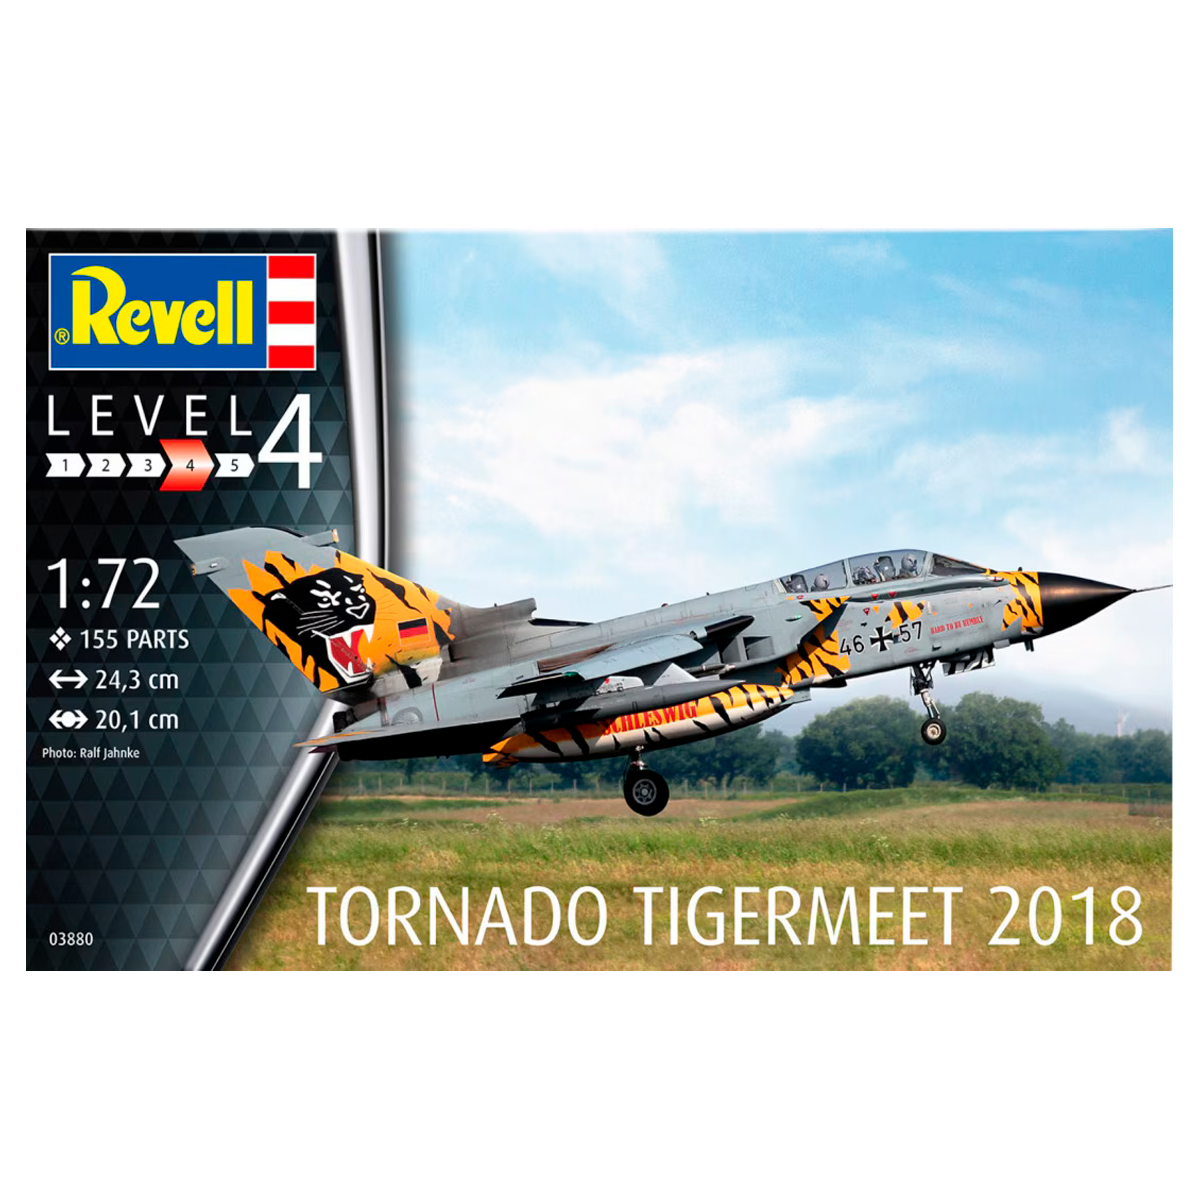 Tornado ECR Tigermeet 2018 1/72